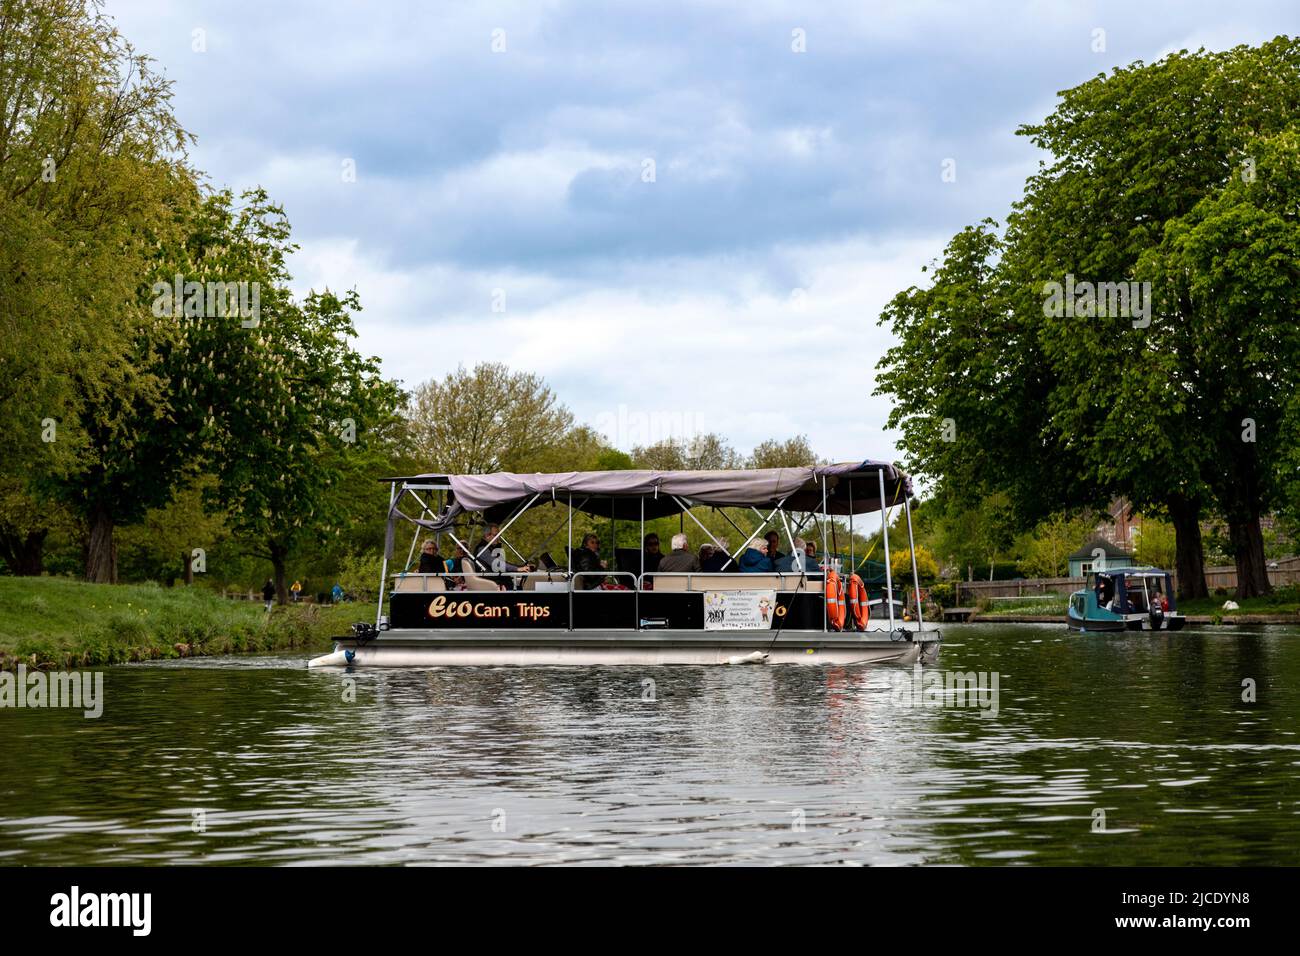 Sightseeing tourists aboard an ECO CAM TRIP pleasure boat, cruising on River Cam at Stourbridge Common, Cambridge, Cambridgeshire, England, UK. Stock Photo